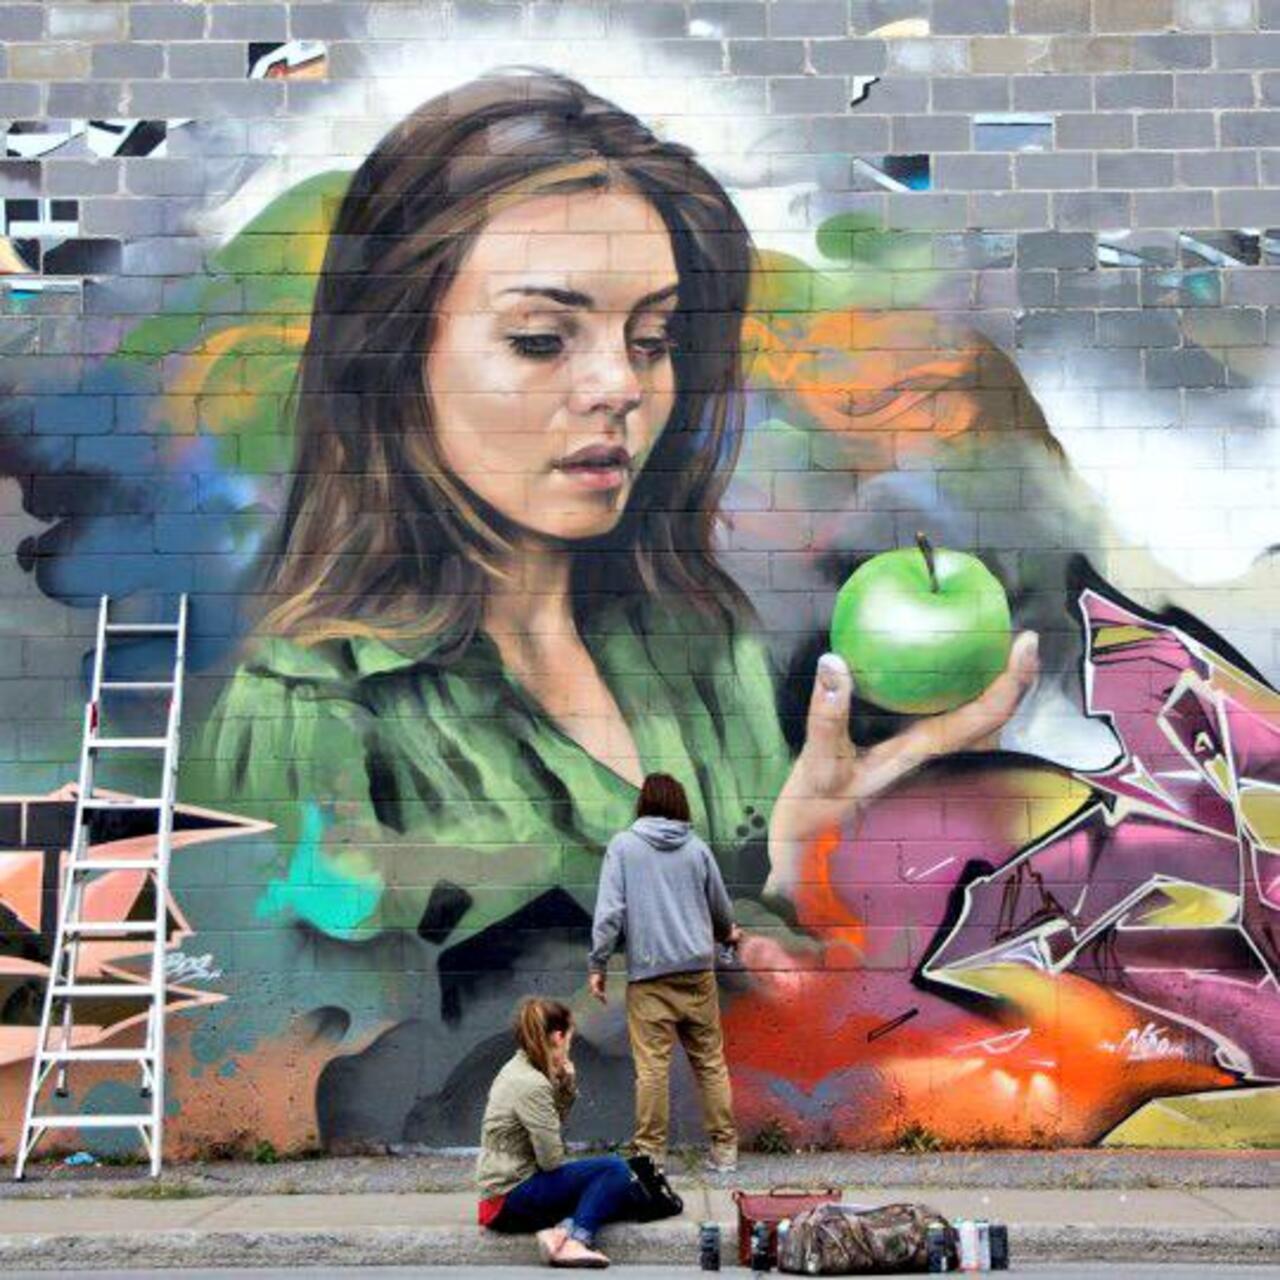 Young Jarus
#streetart #art #graffiti #mural http://t.co/rinoAMLsDq